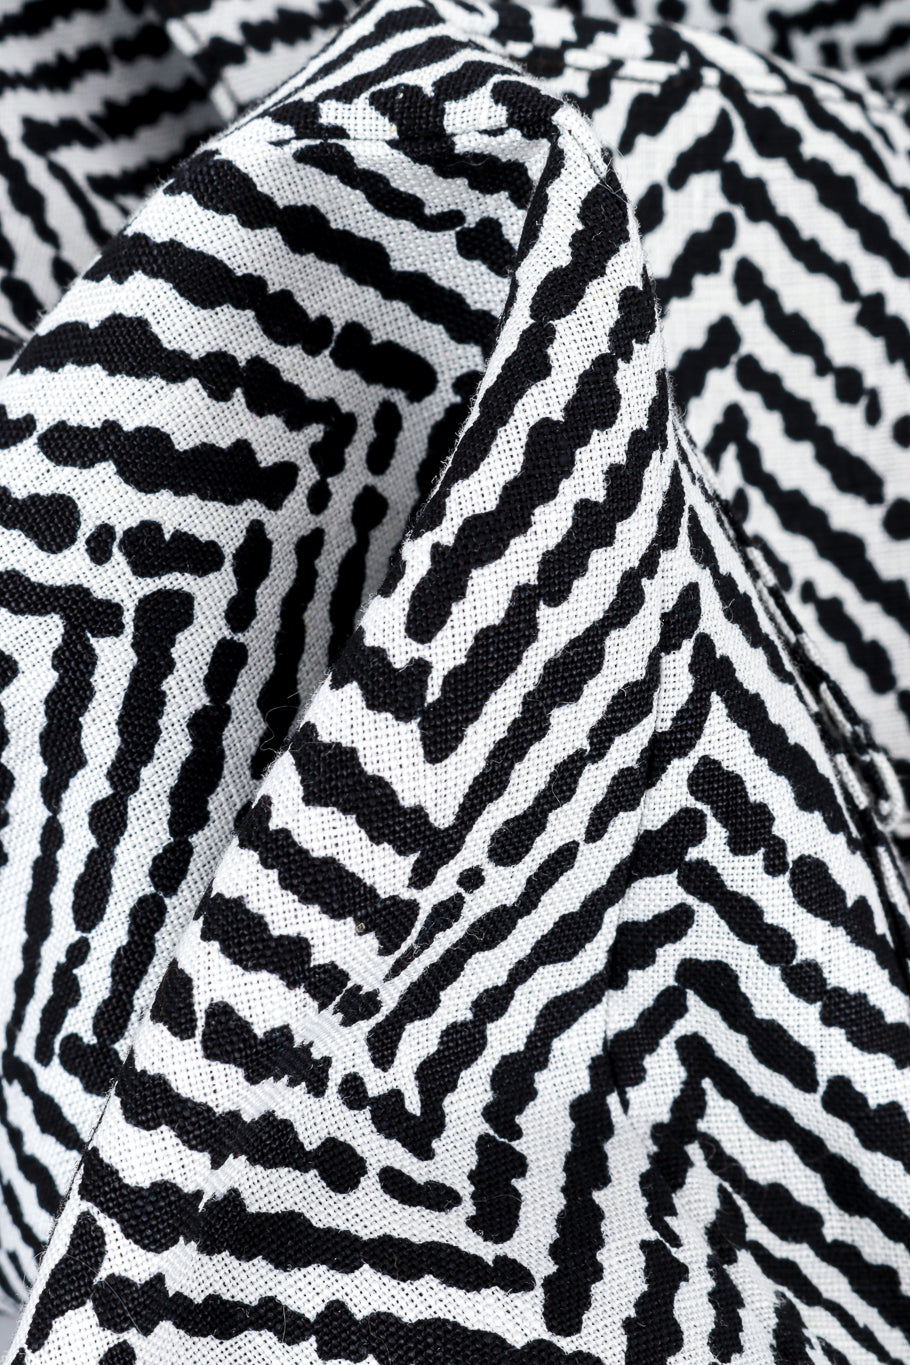 Vintage Geoffrey Beene Double Breasted Chevron Stripe Jacket fabric print closeup @recess la